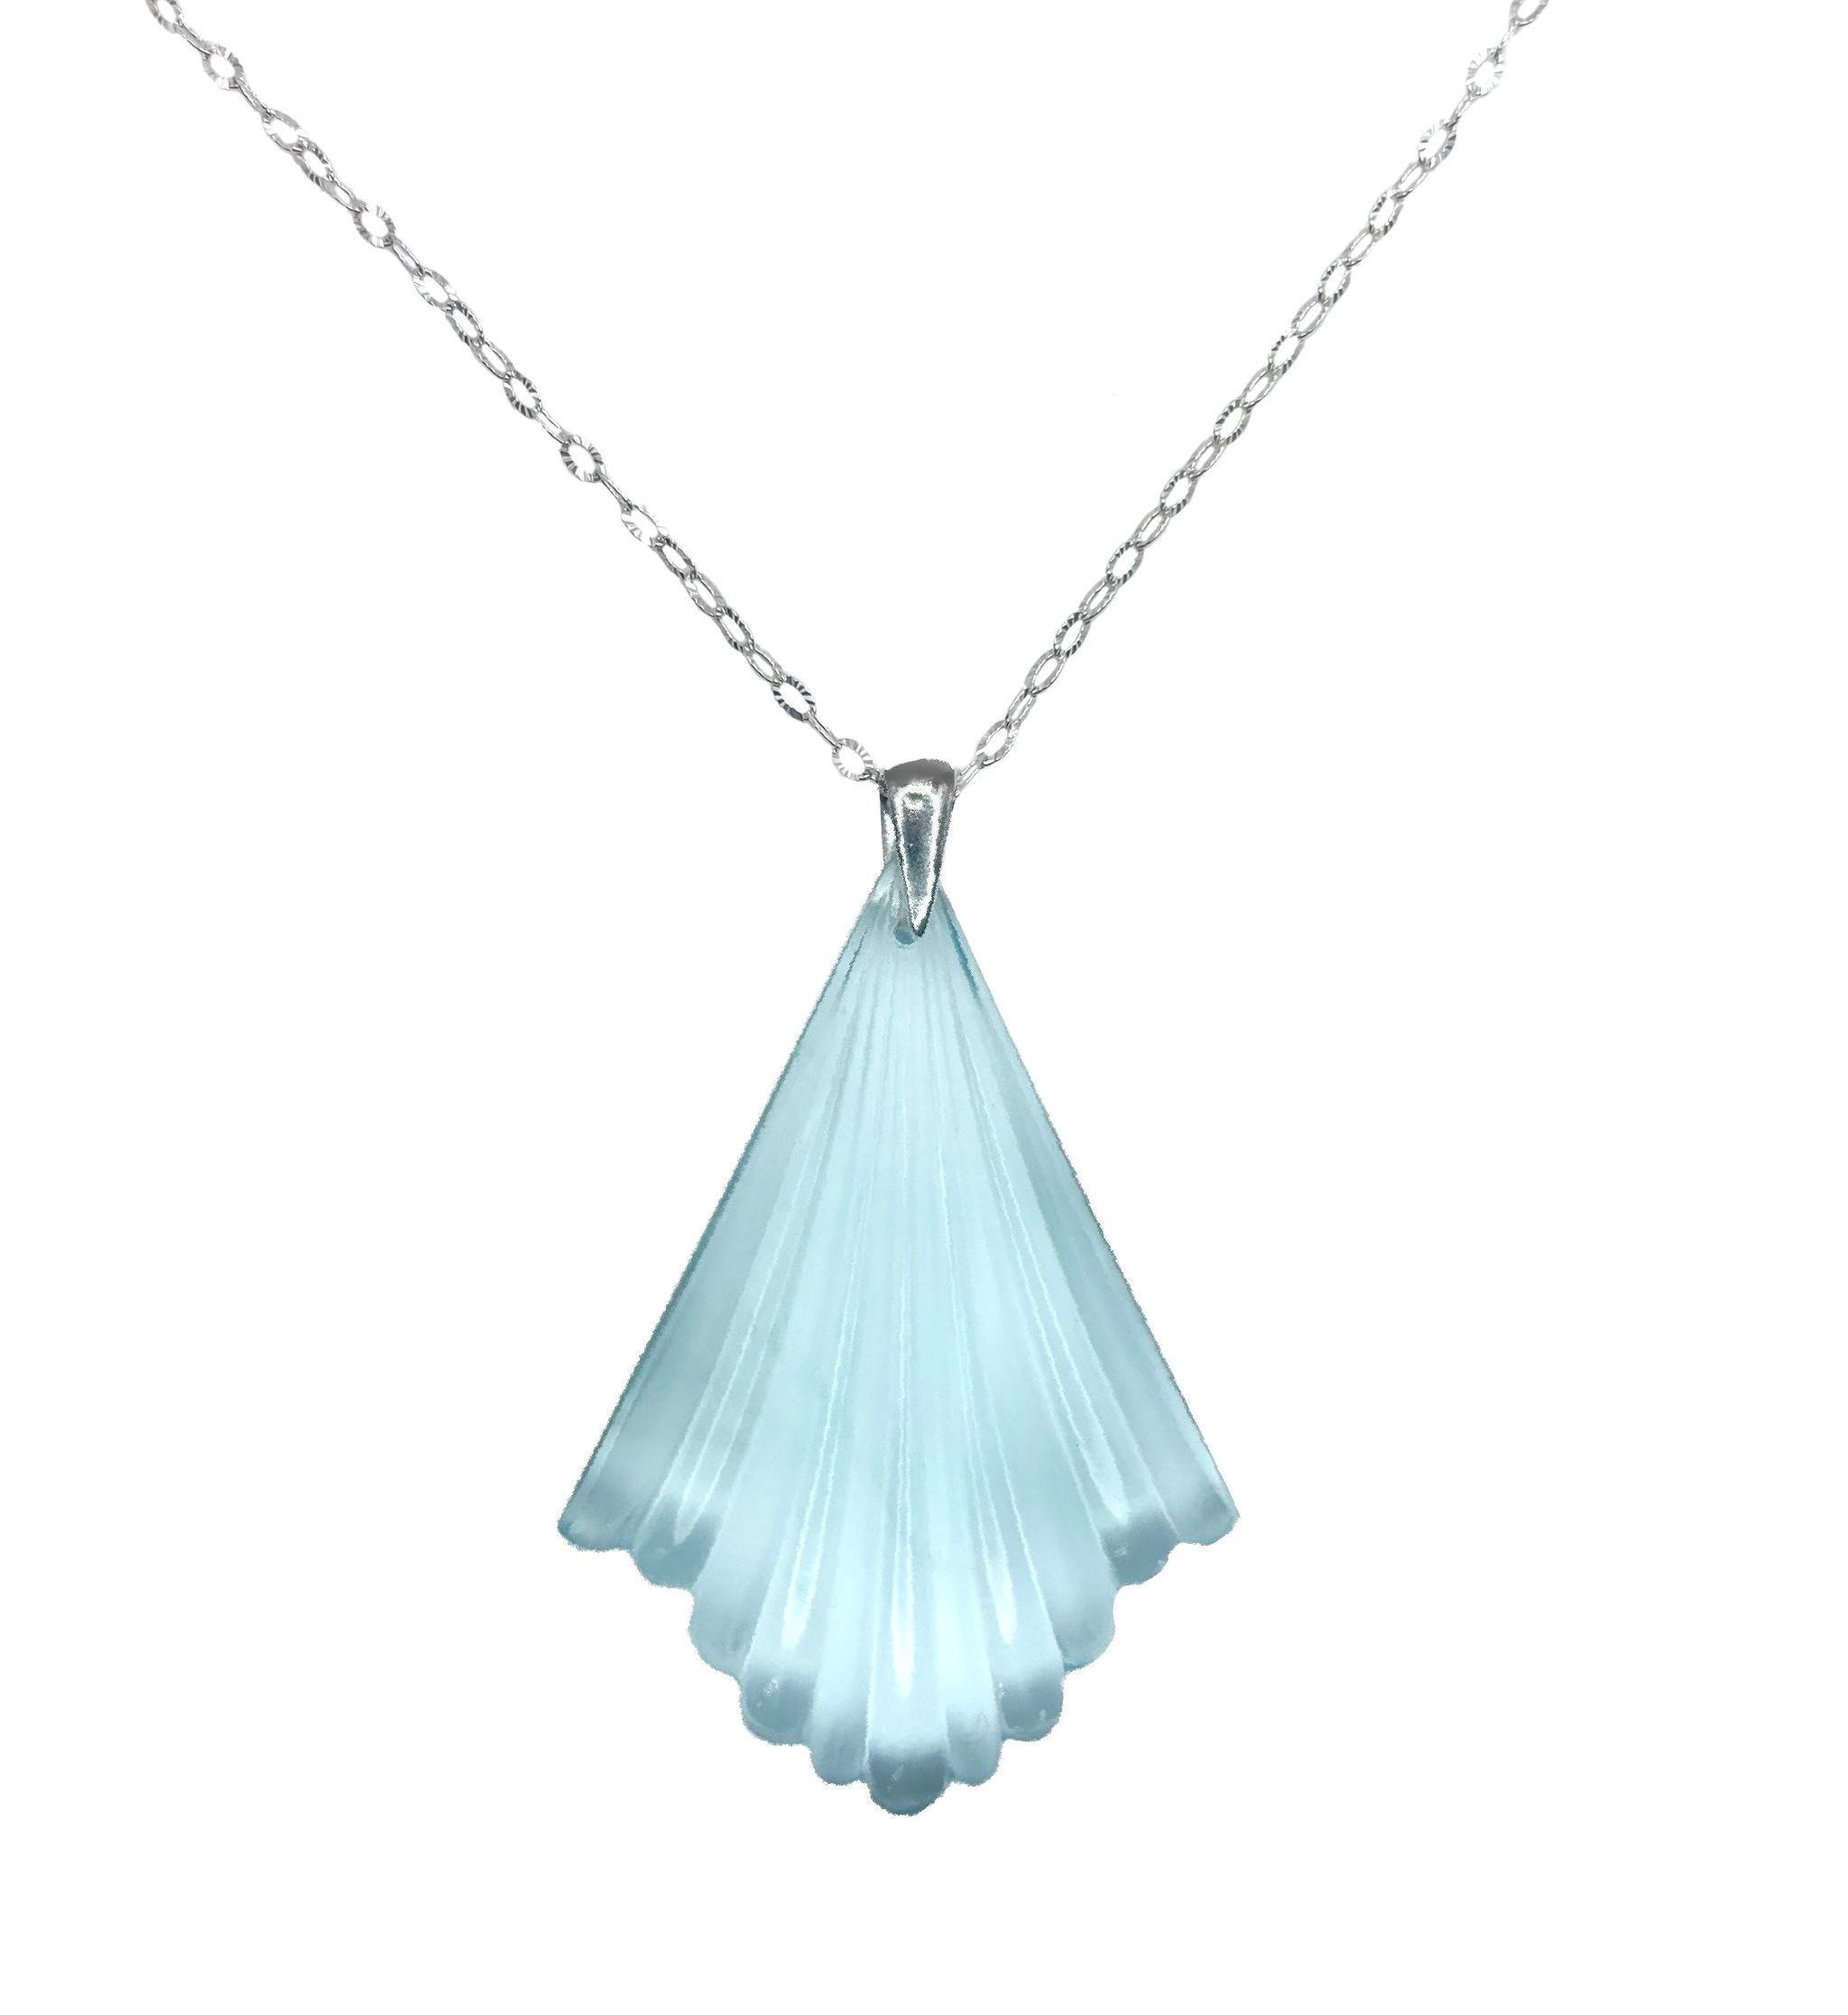 Women's or Men's PONTIEL Art Deco Aqua Glass Fan with Sterling Silver Chain Pendant Necklace For Sale